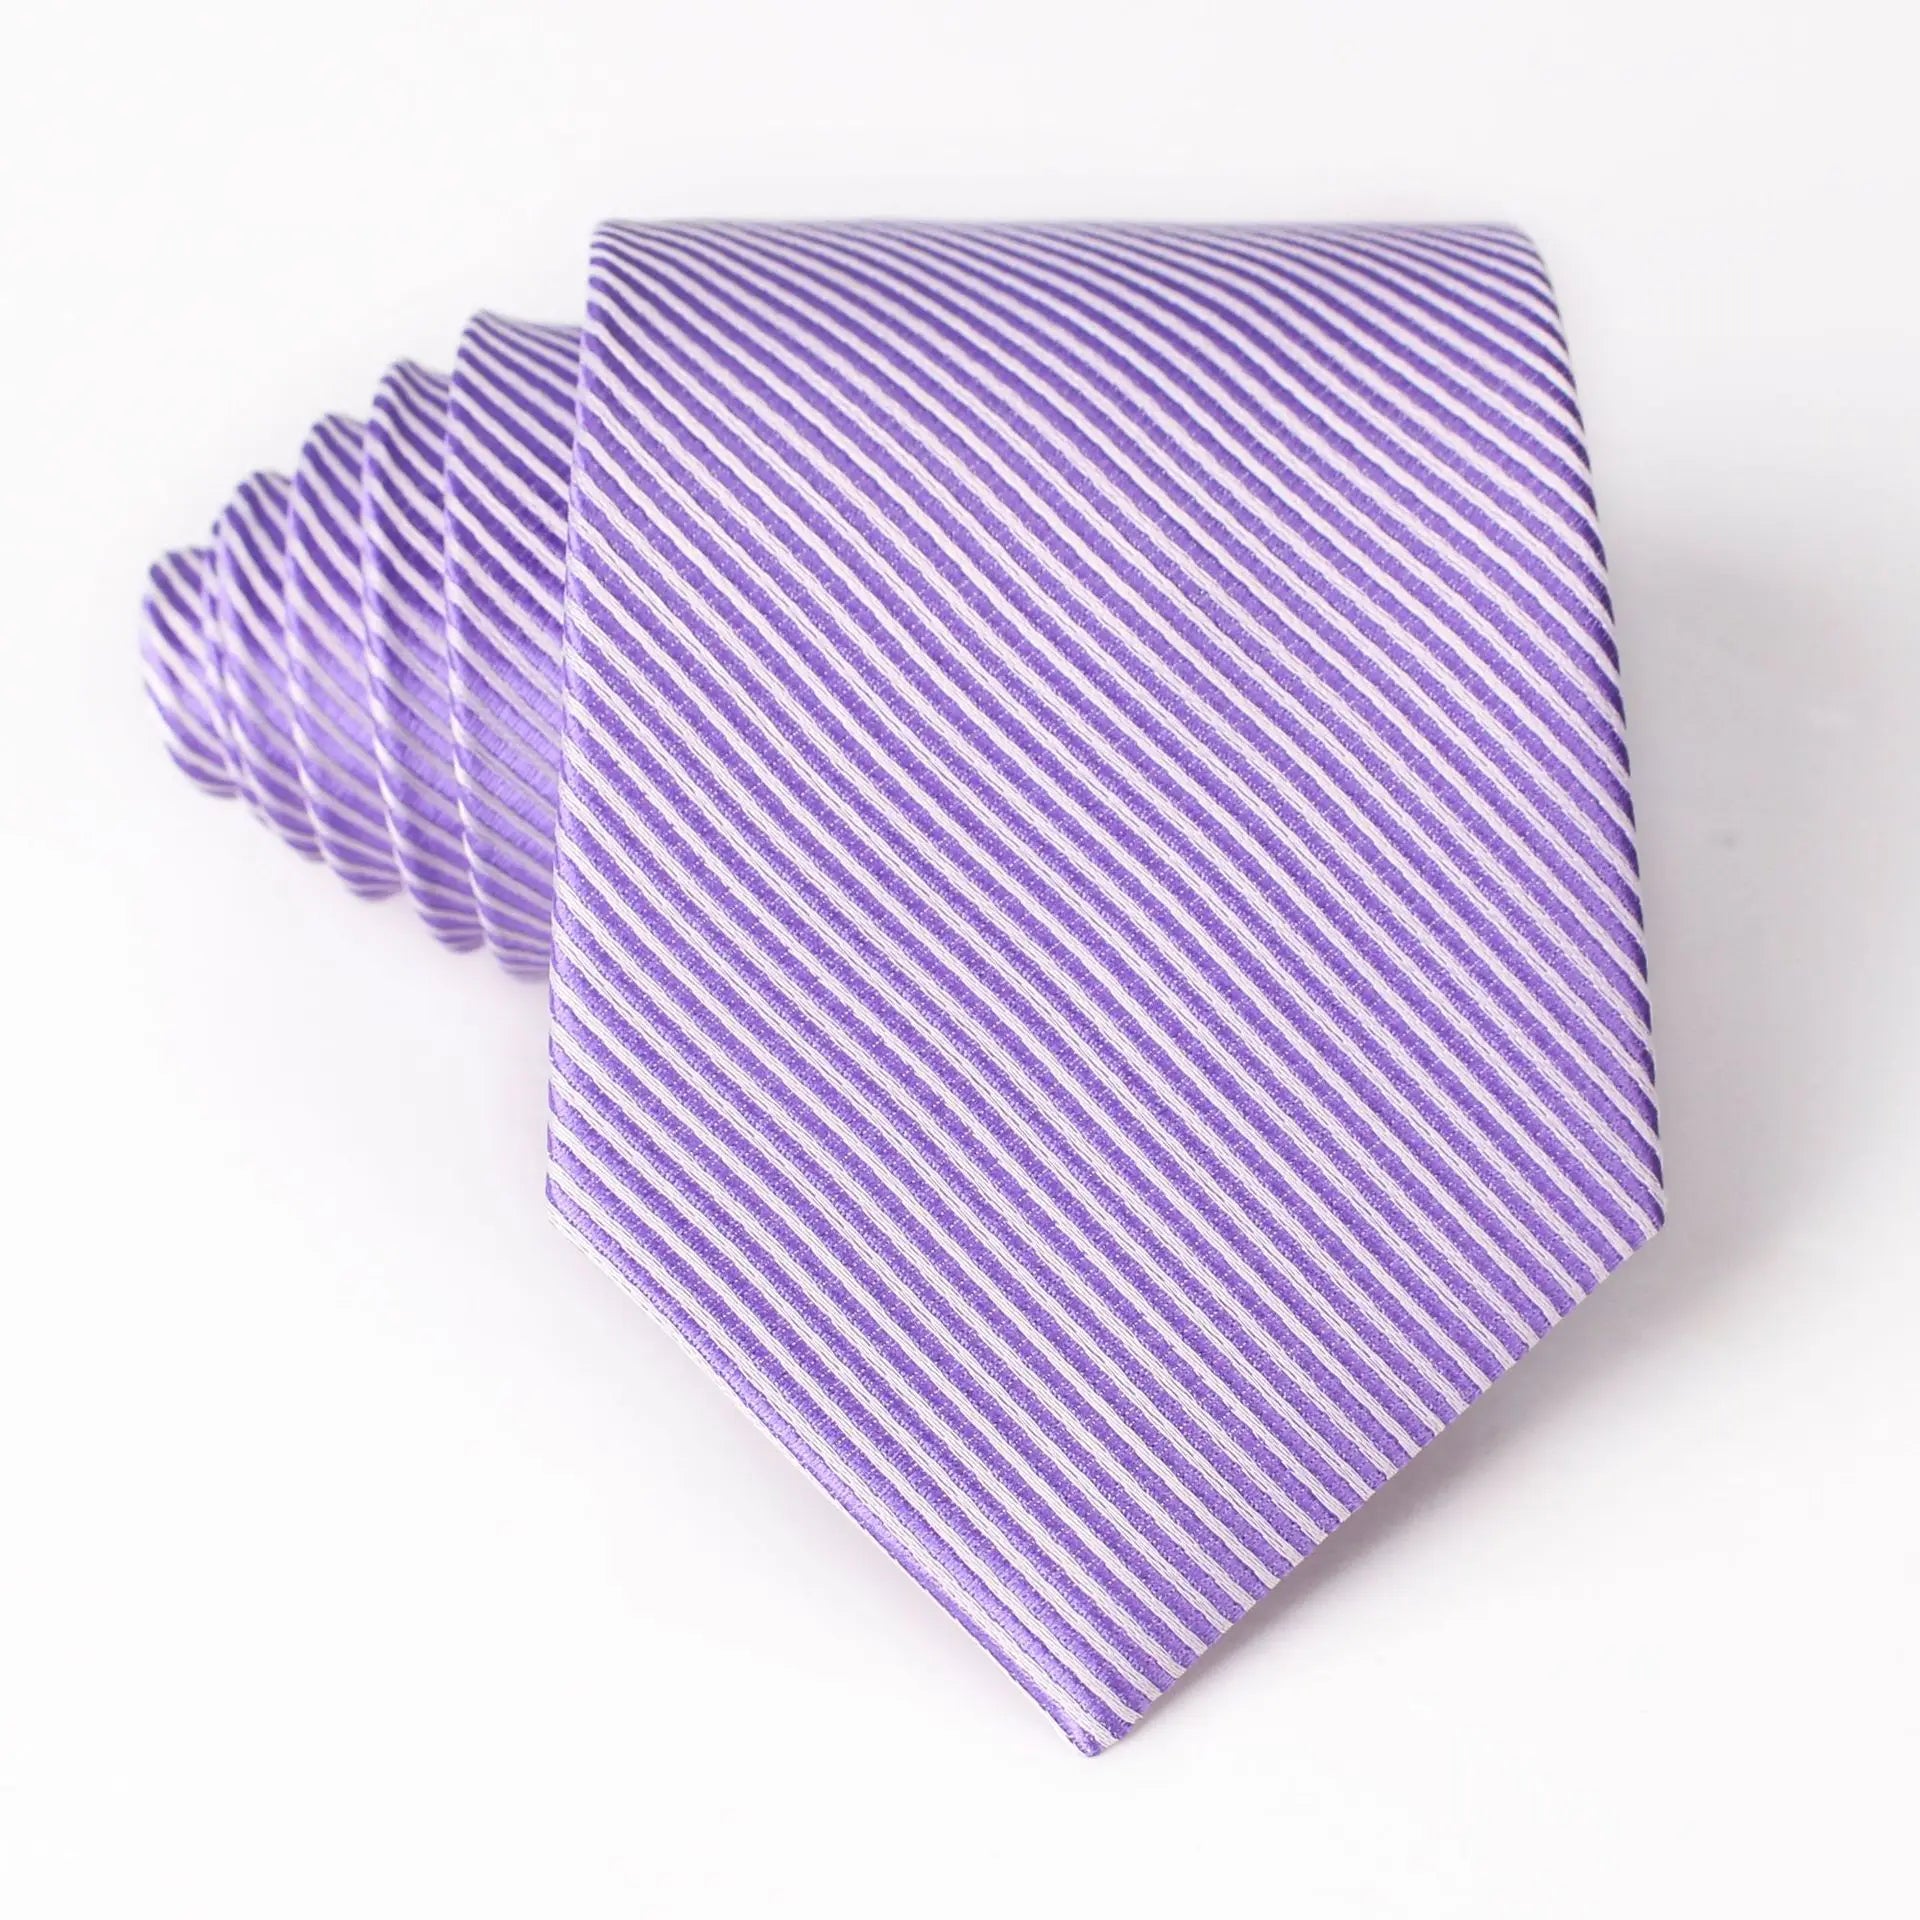 Light pink/purple tie   8cm